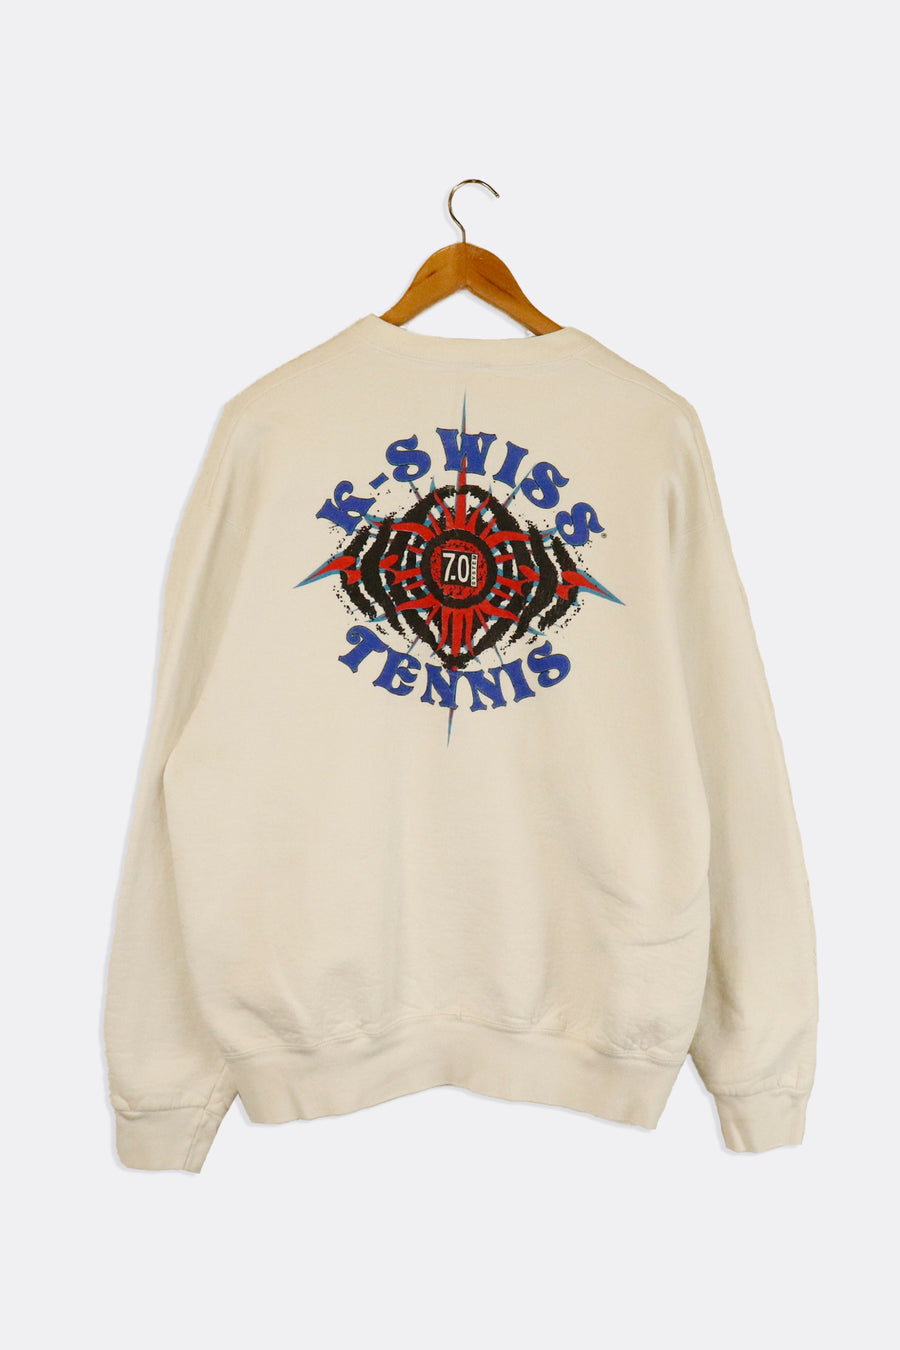 Vintage K-Swiss Tennis National Team Abstract Colourful Sun Graphic Sweatshirt Sz XL